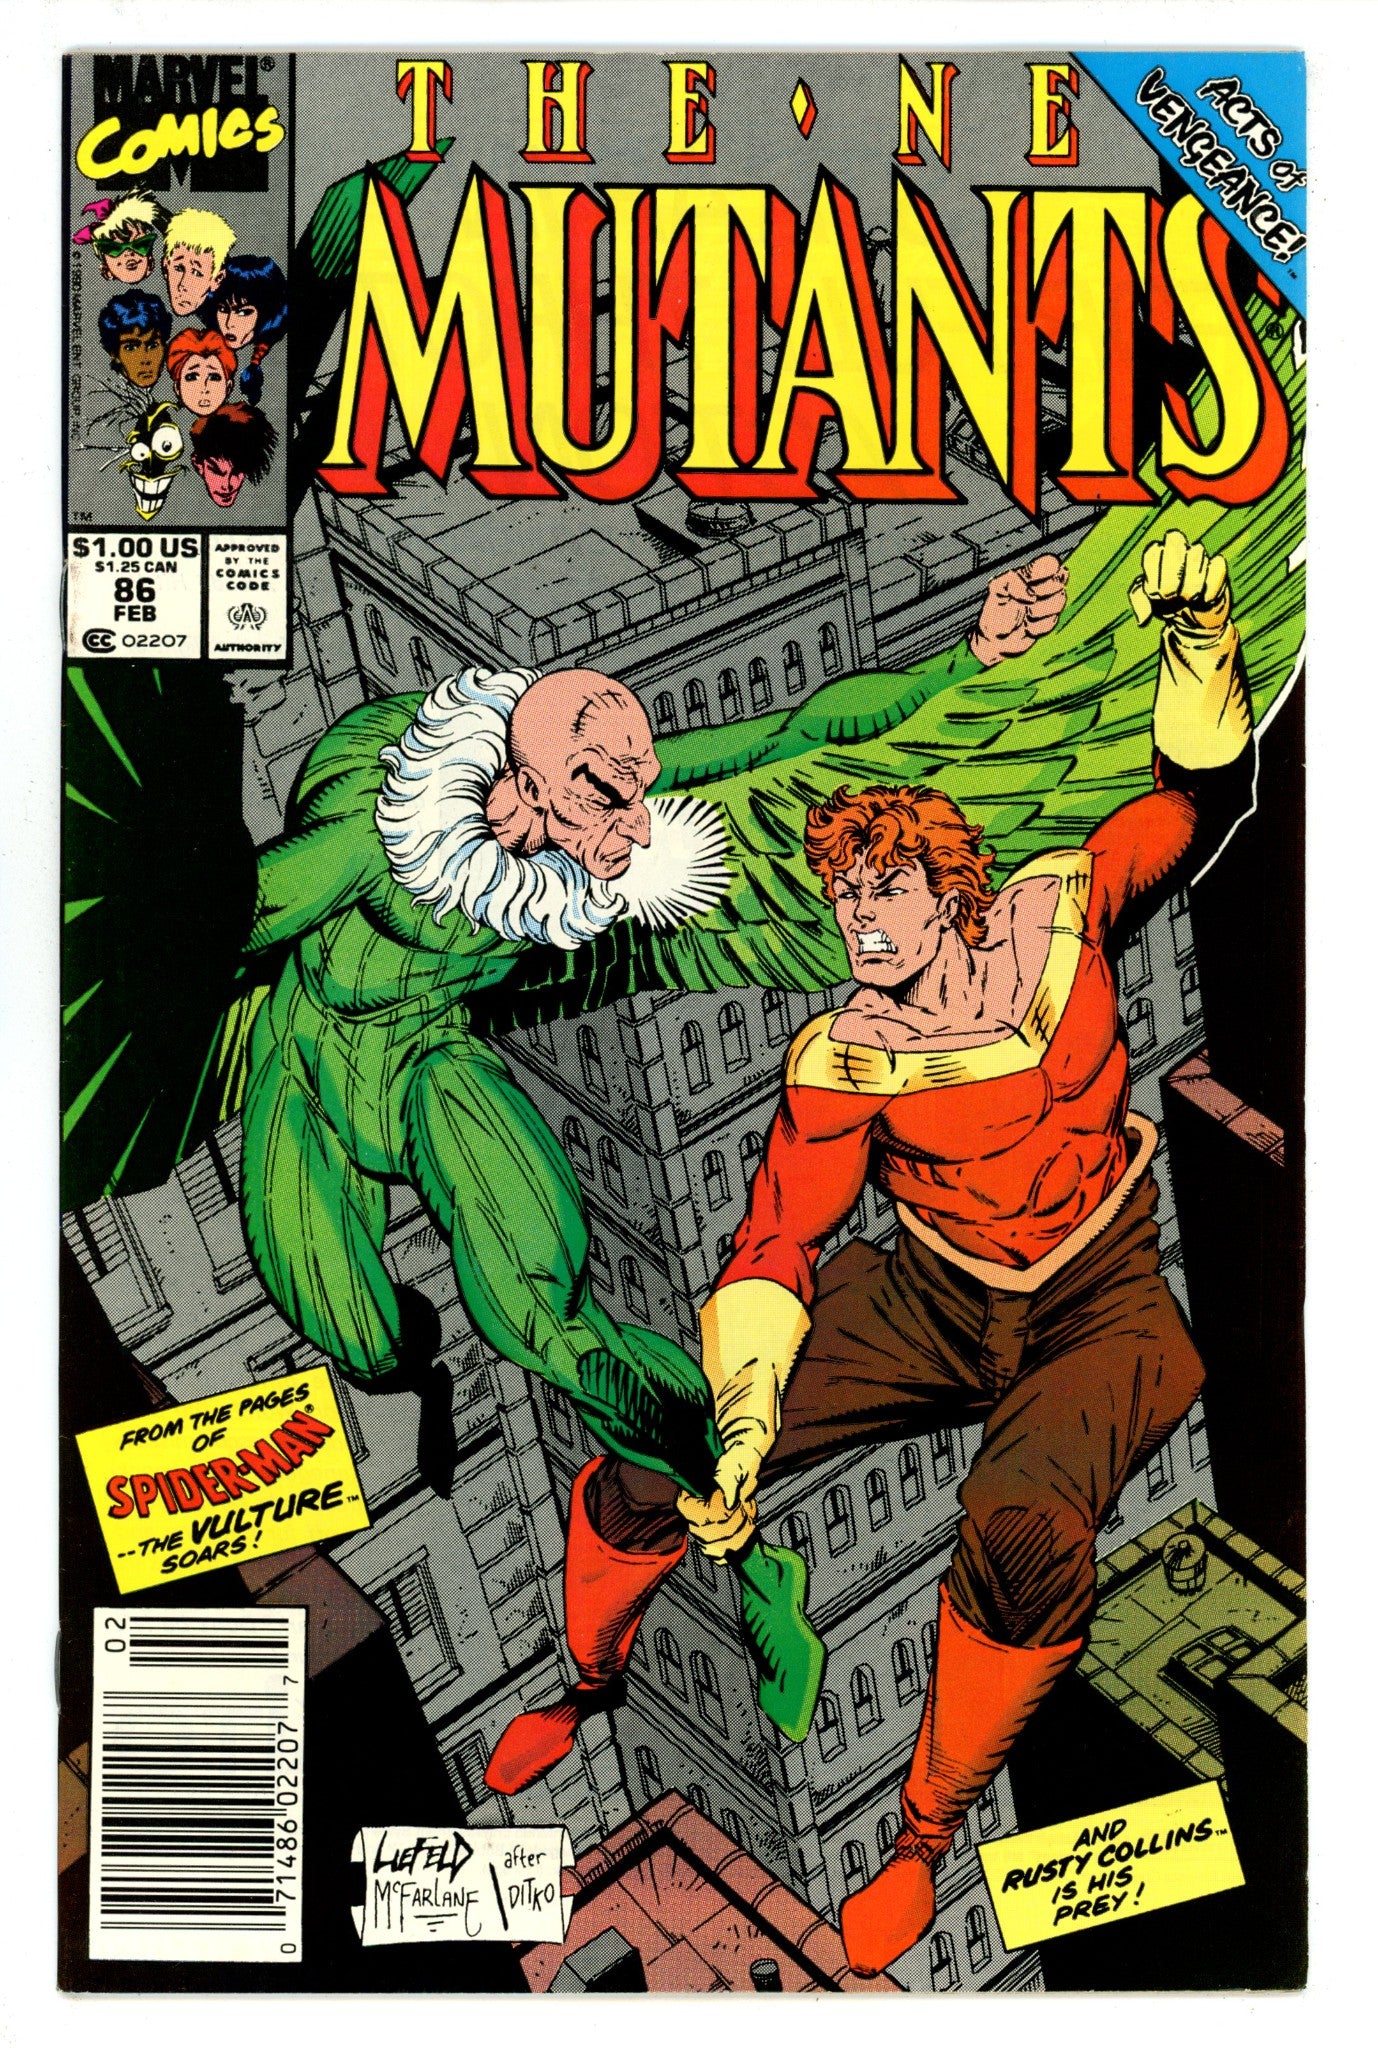 The New Mutants Vol 1 86 VF (8.0) (1990) Newsstand 